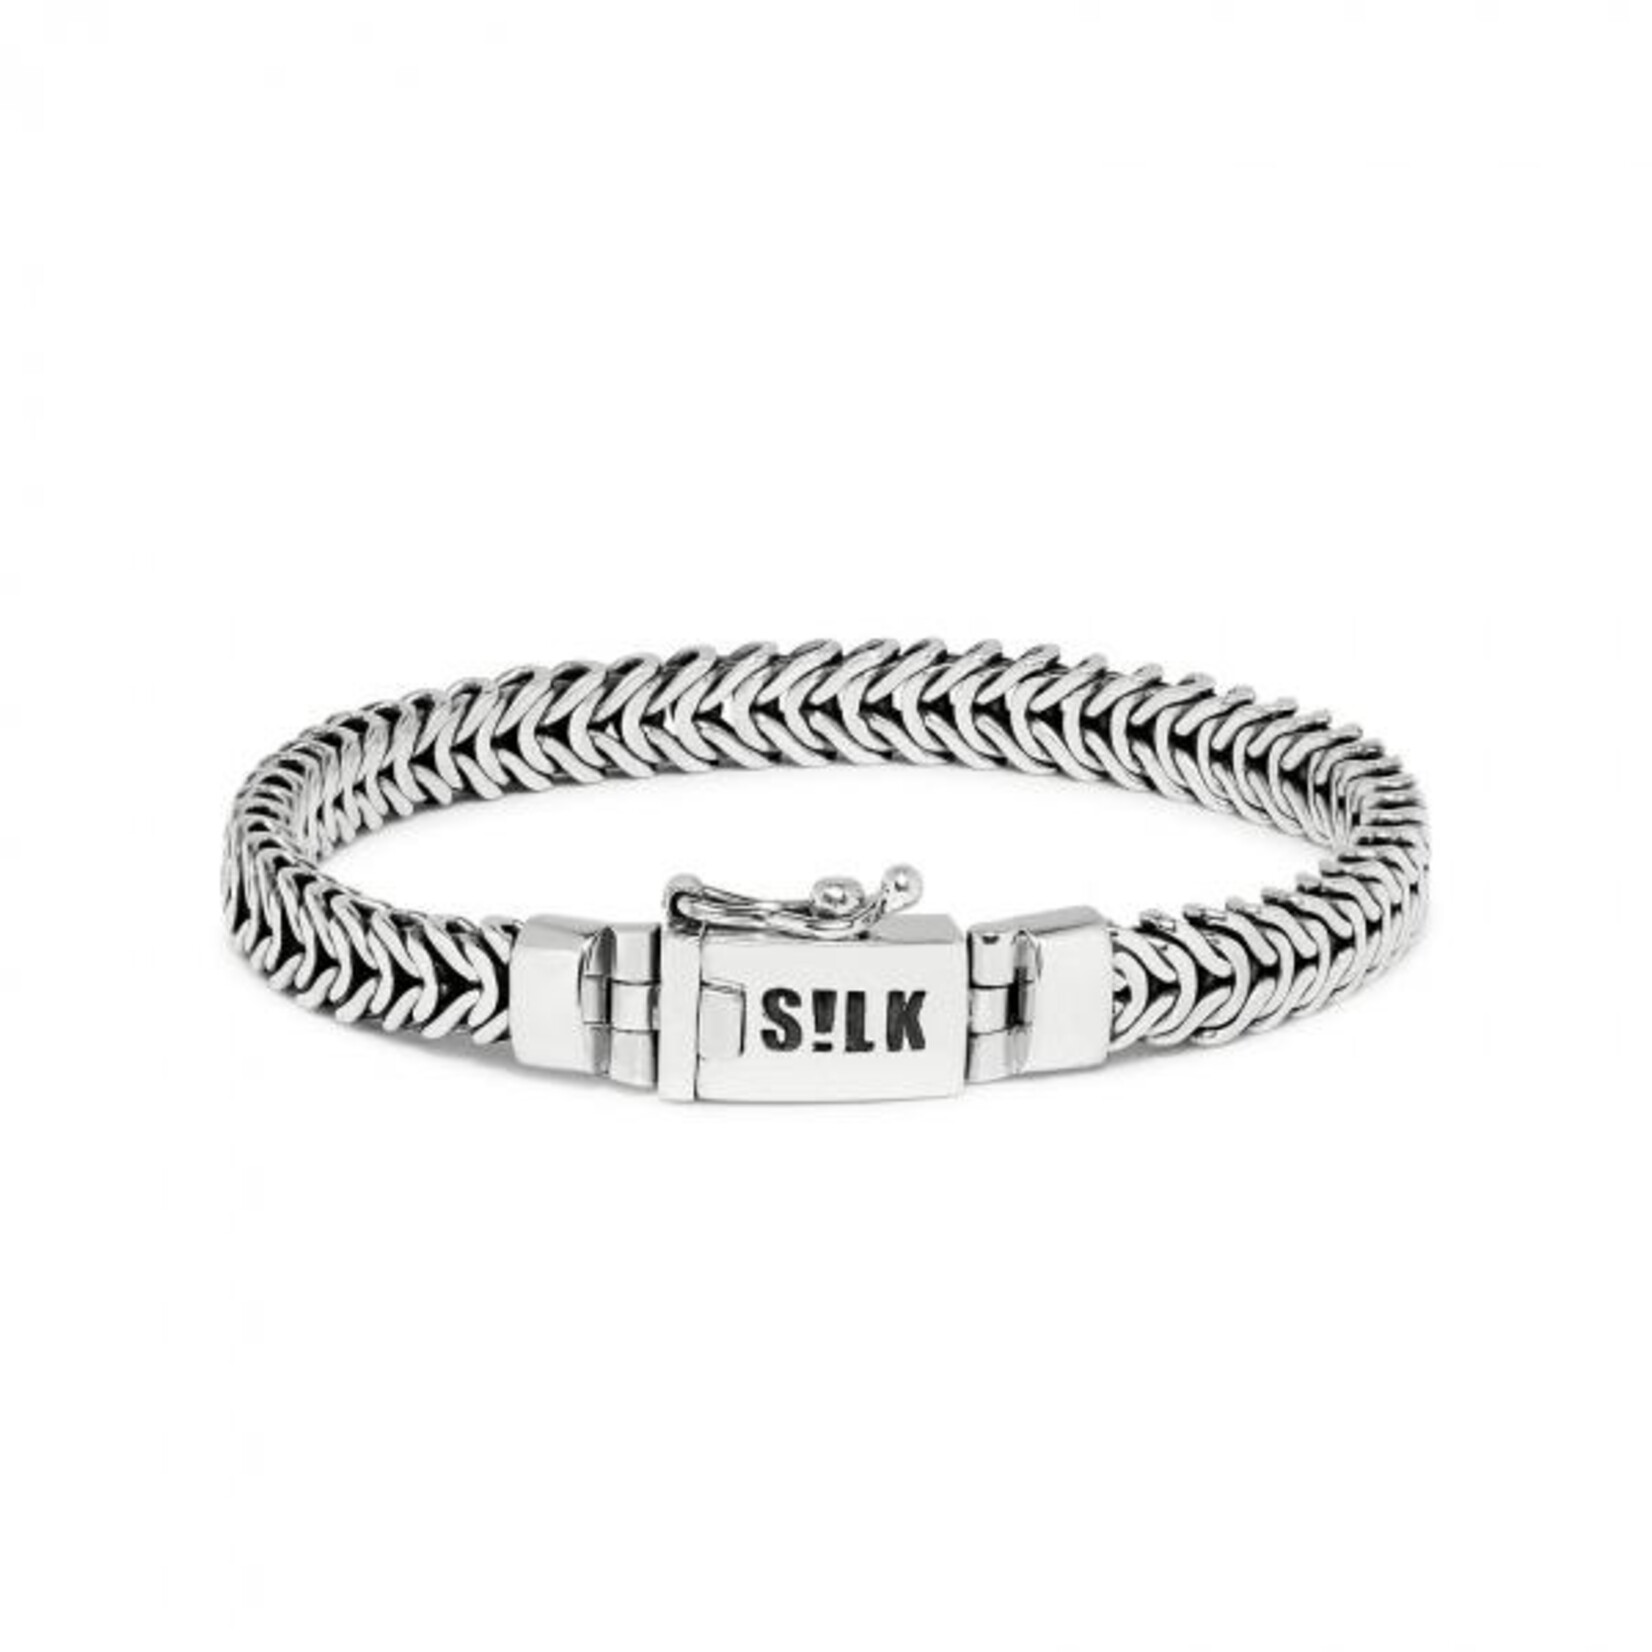 Silk Silk armband 347 19cm 6mm